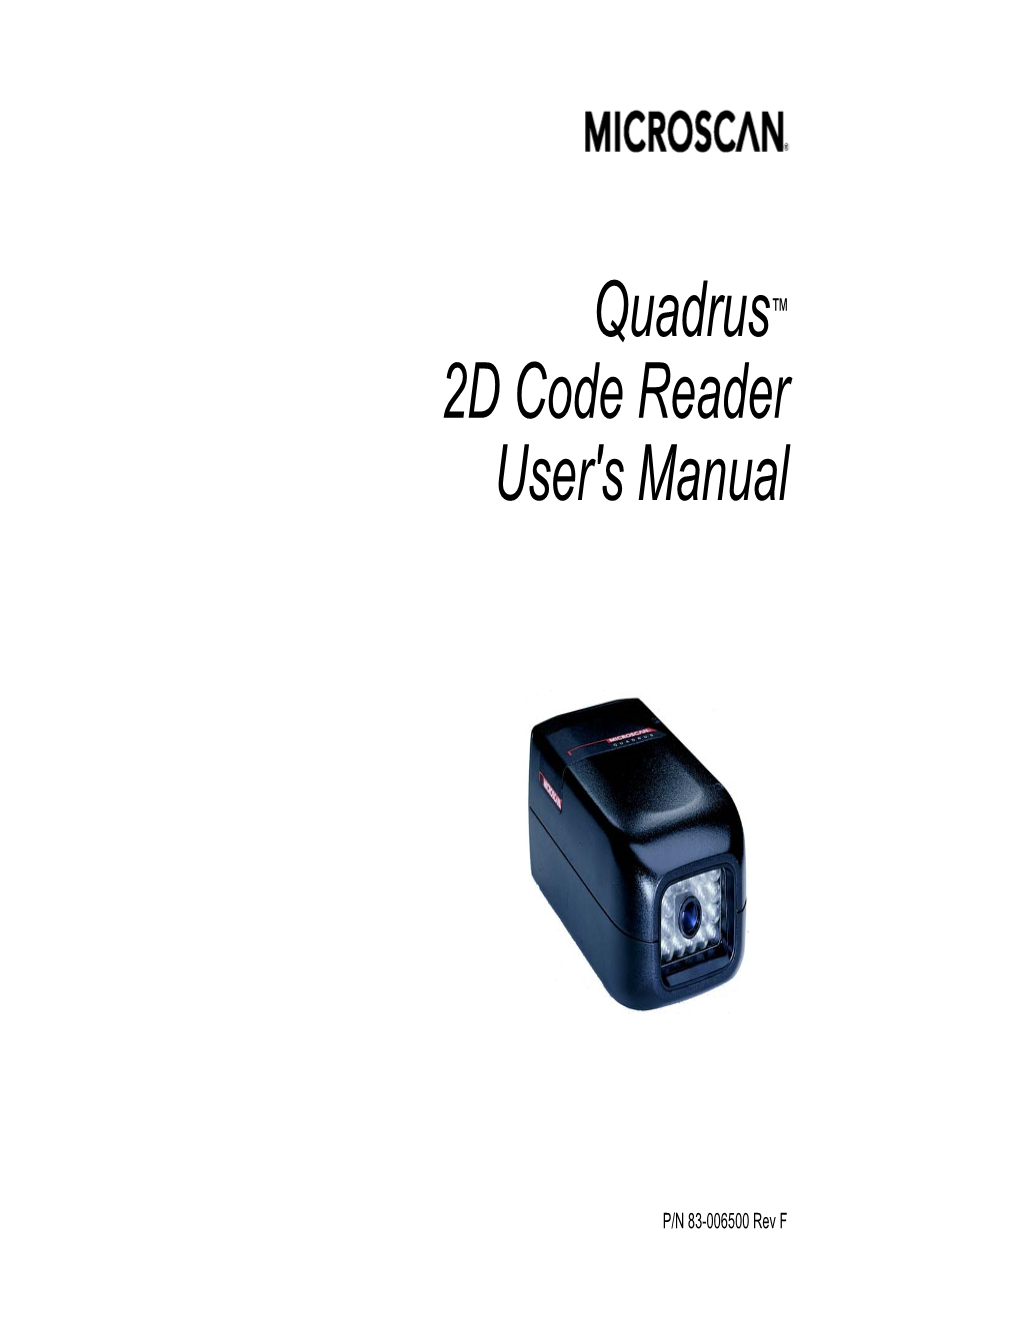 Quadrus 2D Code Reader User's Manual